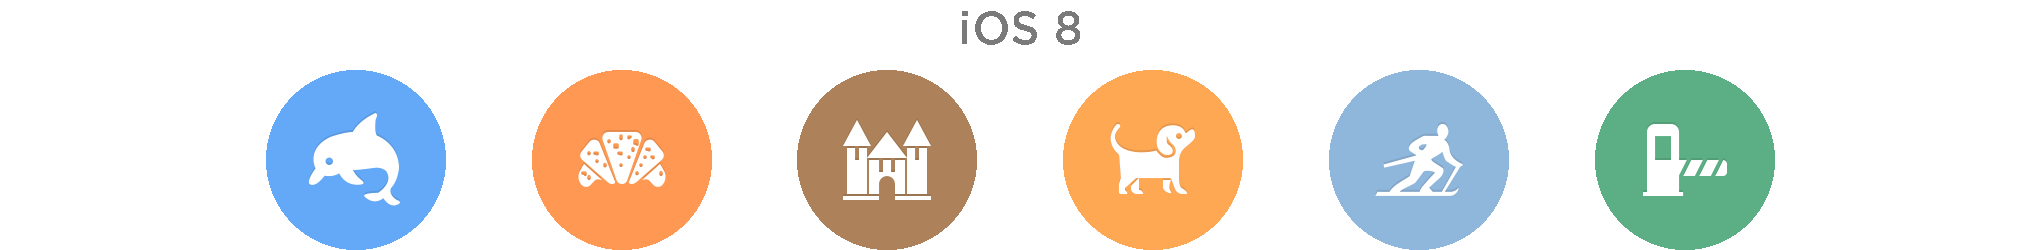 iOS 8 iOS 12 POI icon revisions animated GIF